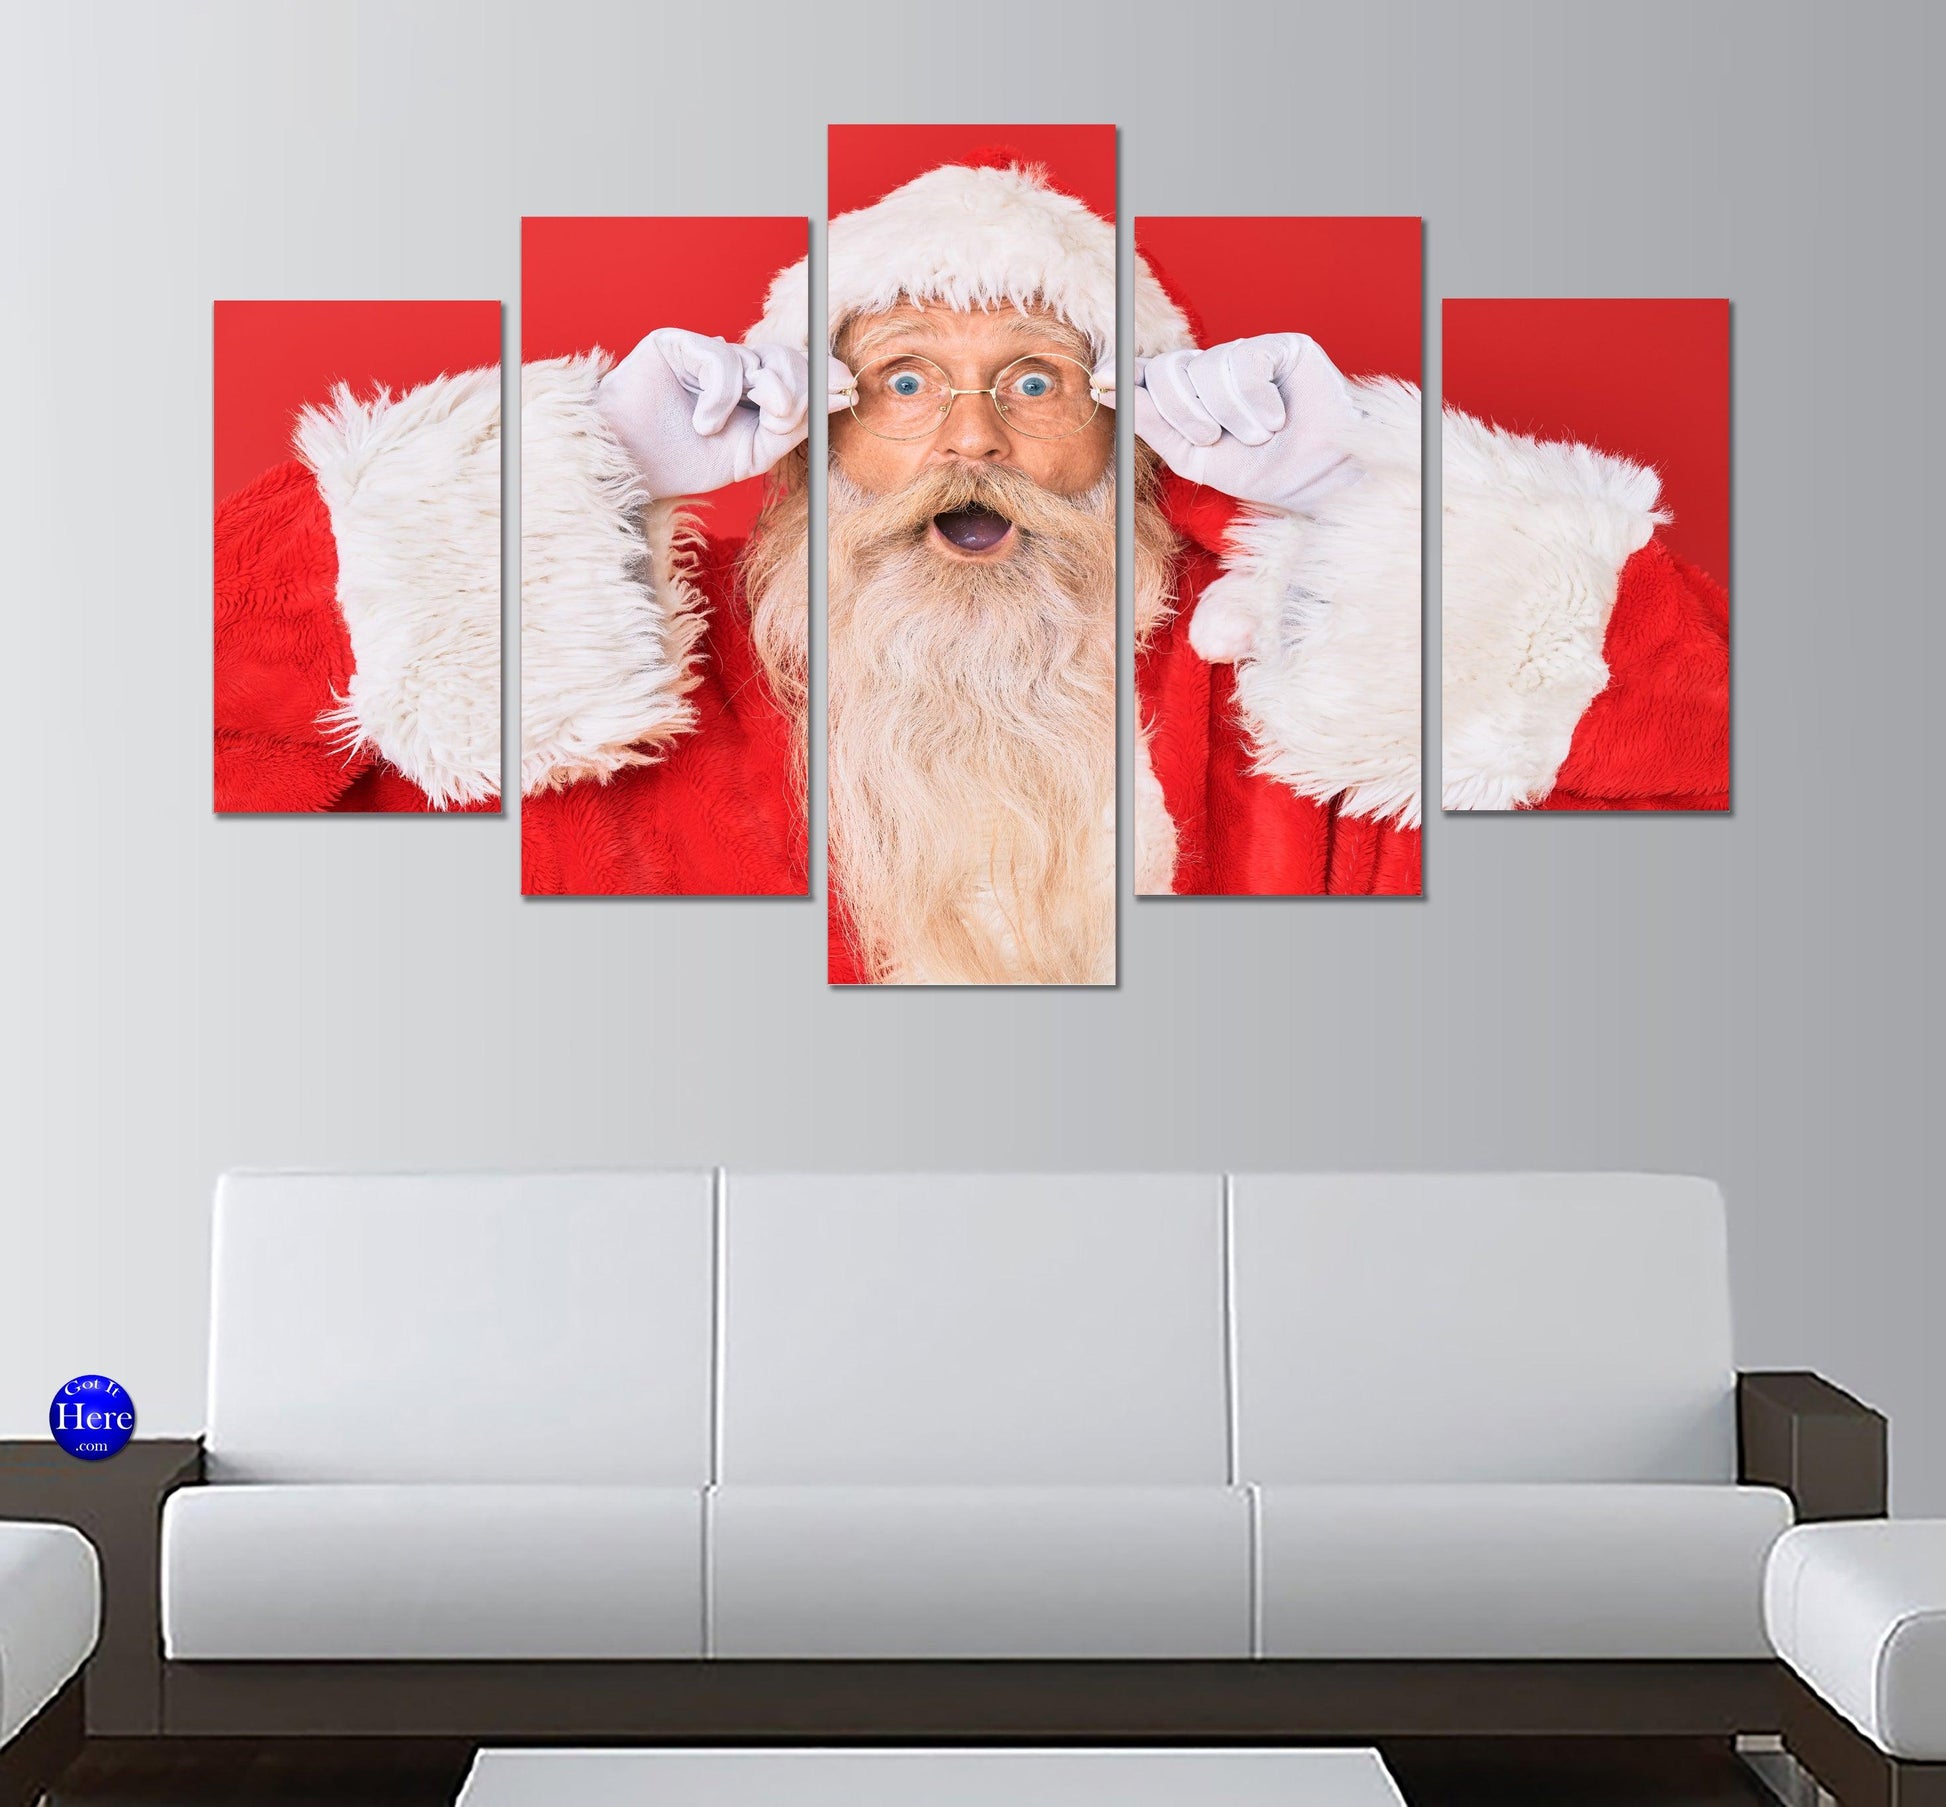 Surprised Santa Claus 5 Panel Canvas Print Wall Art - GotItHere.com